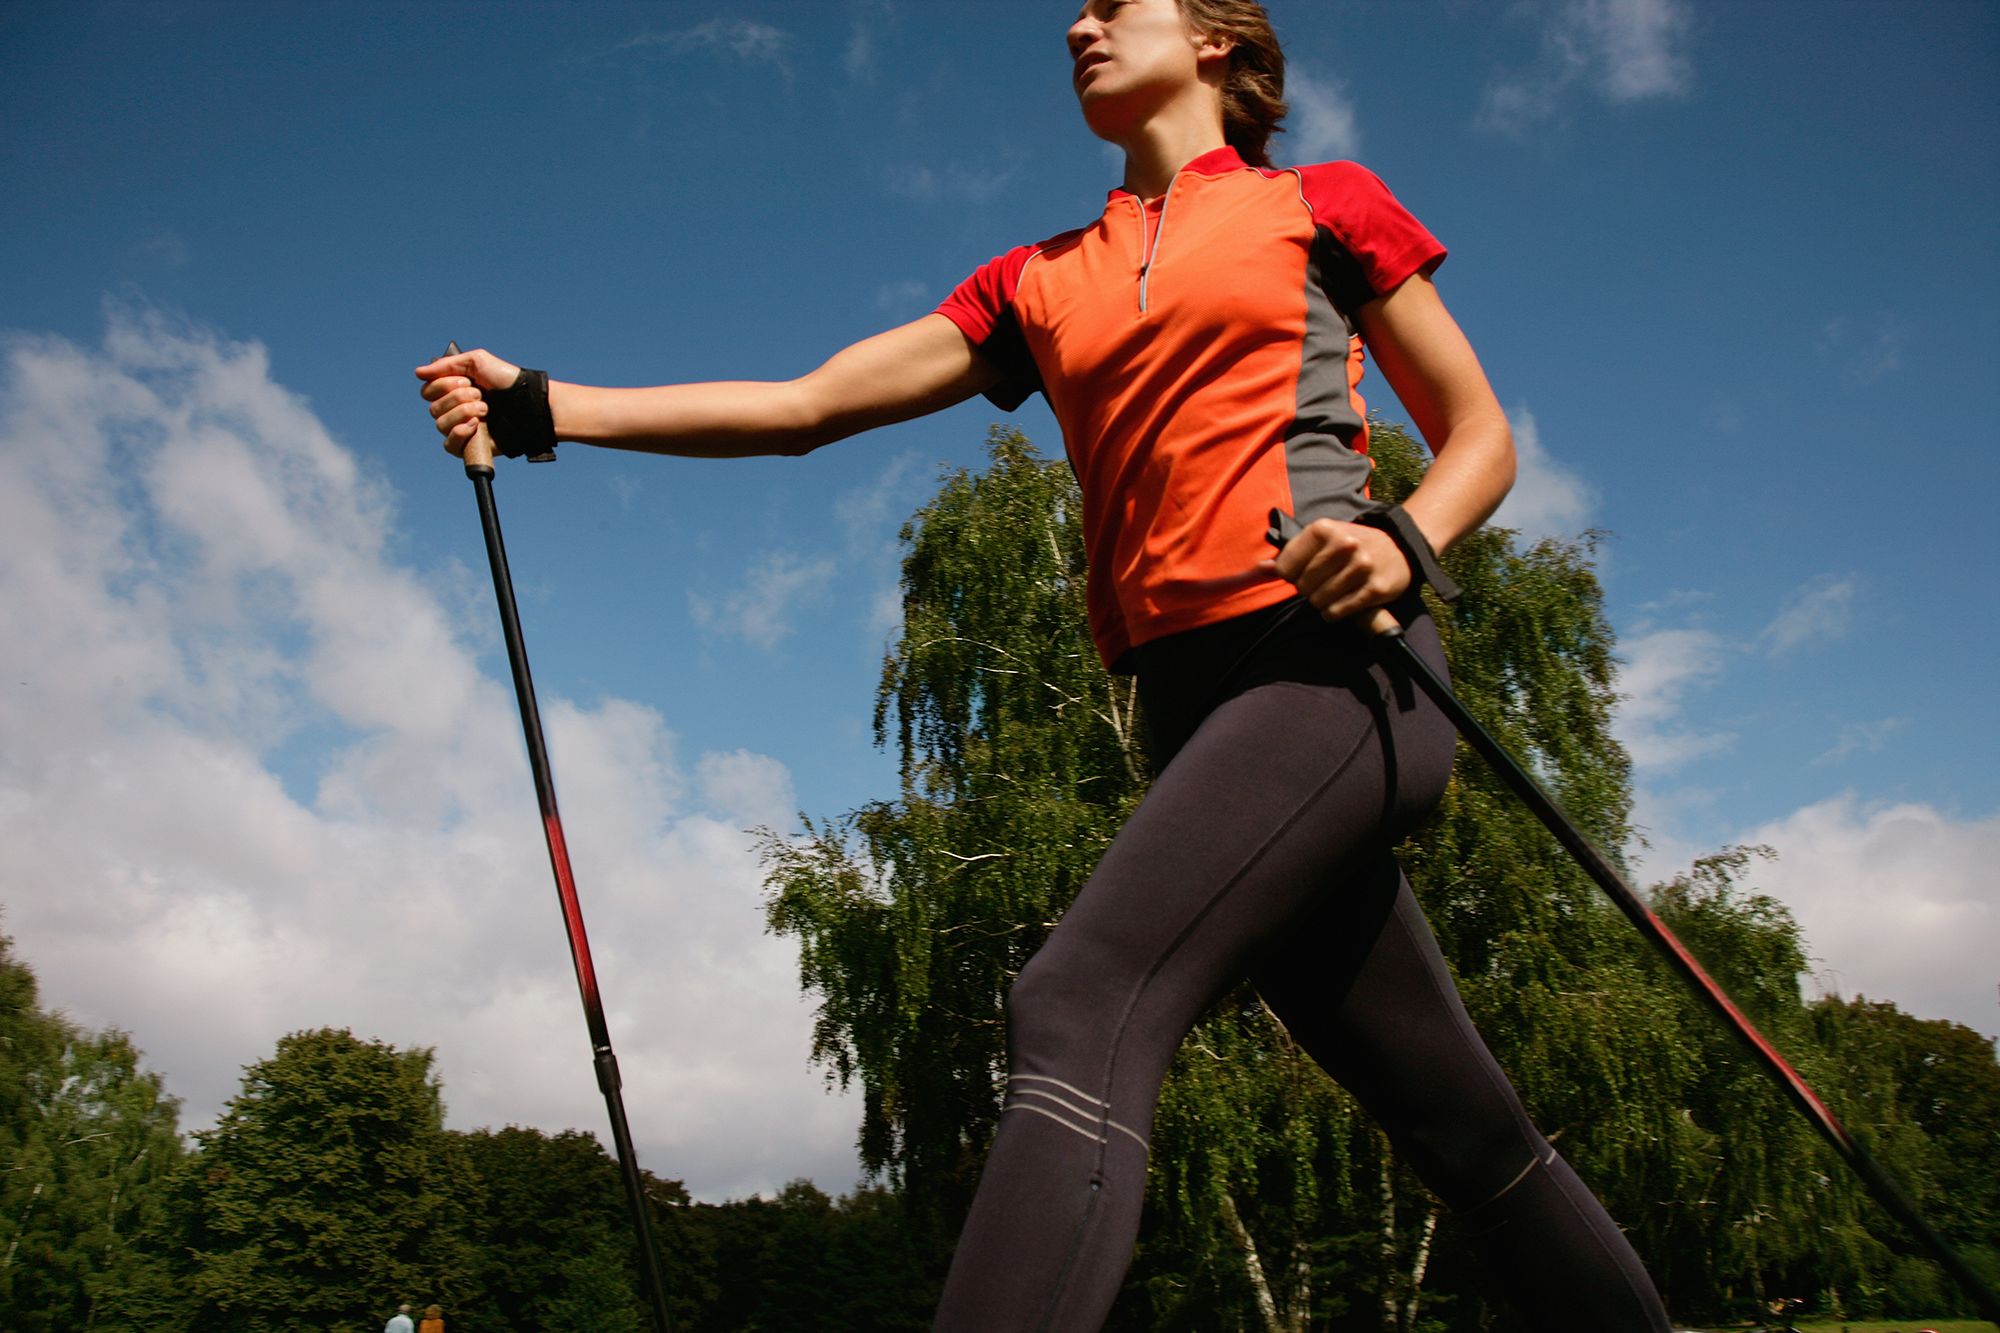 Ontstaan bereiden Mentaliteit Nordic walking beats interval training for better heart function | CNN